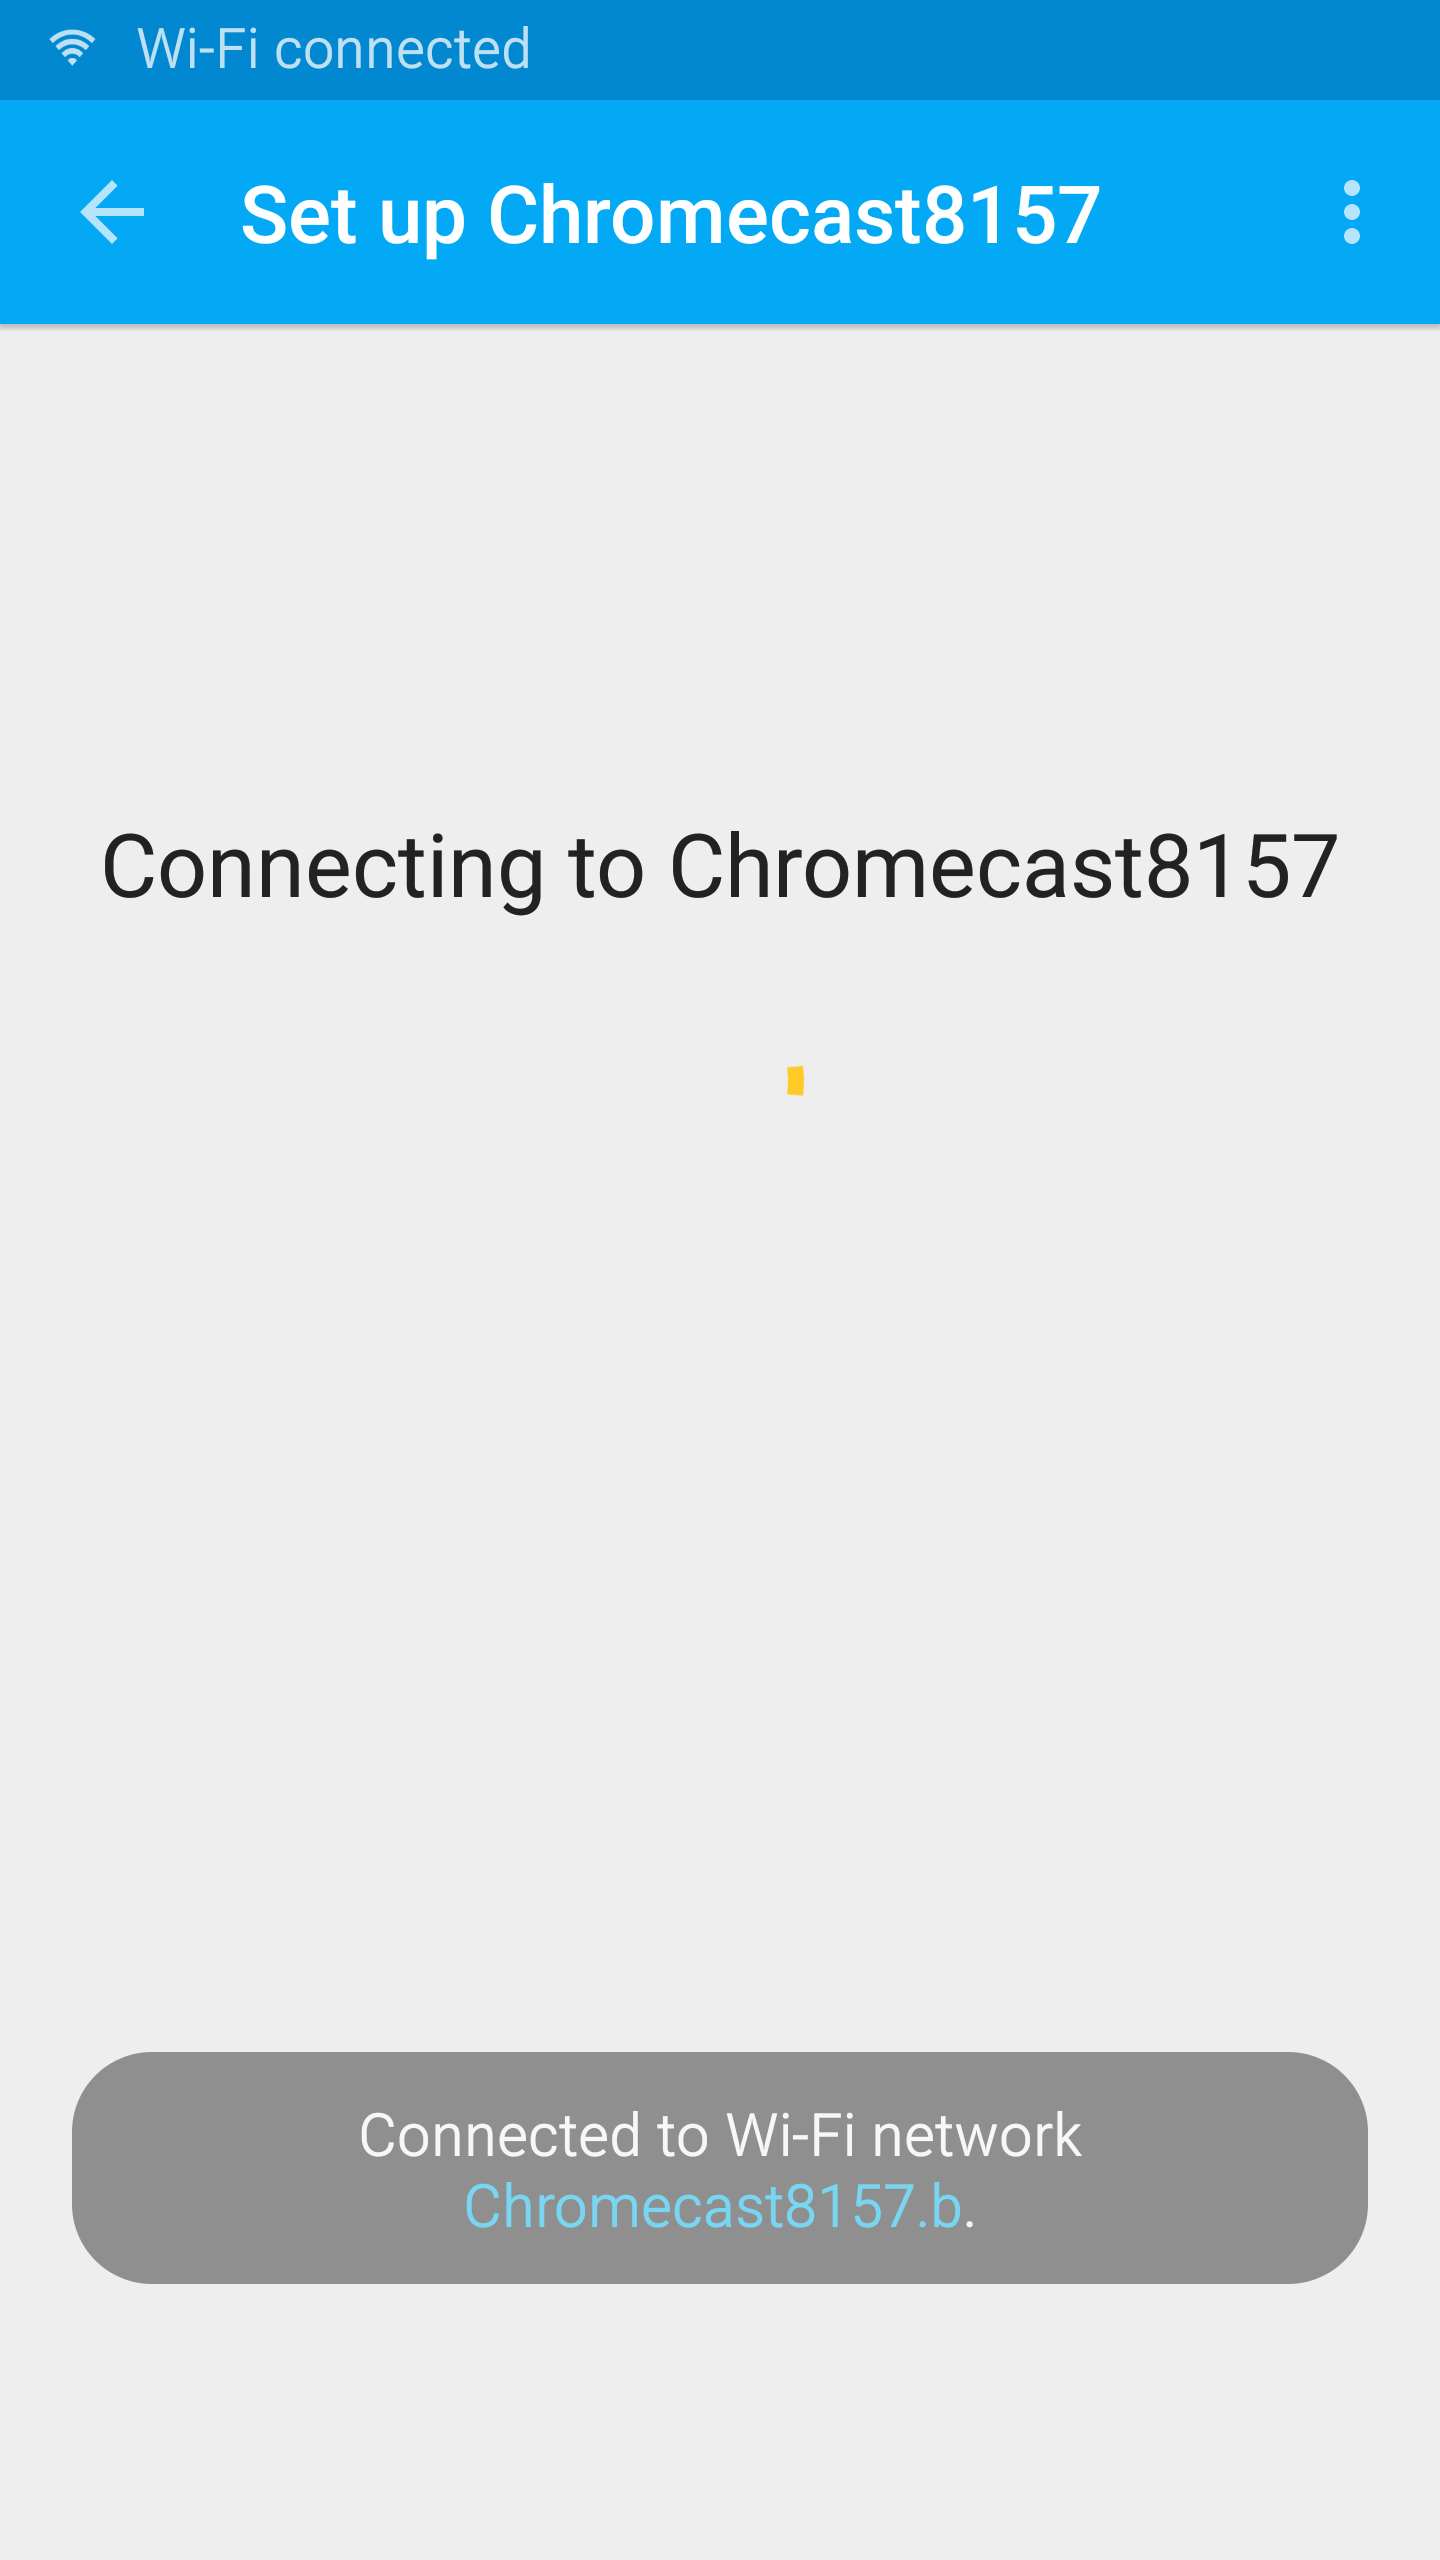 how to find mac address for chromecast